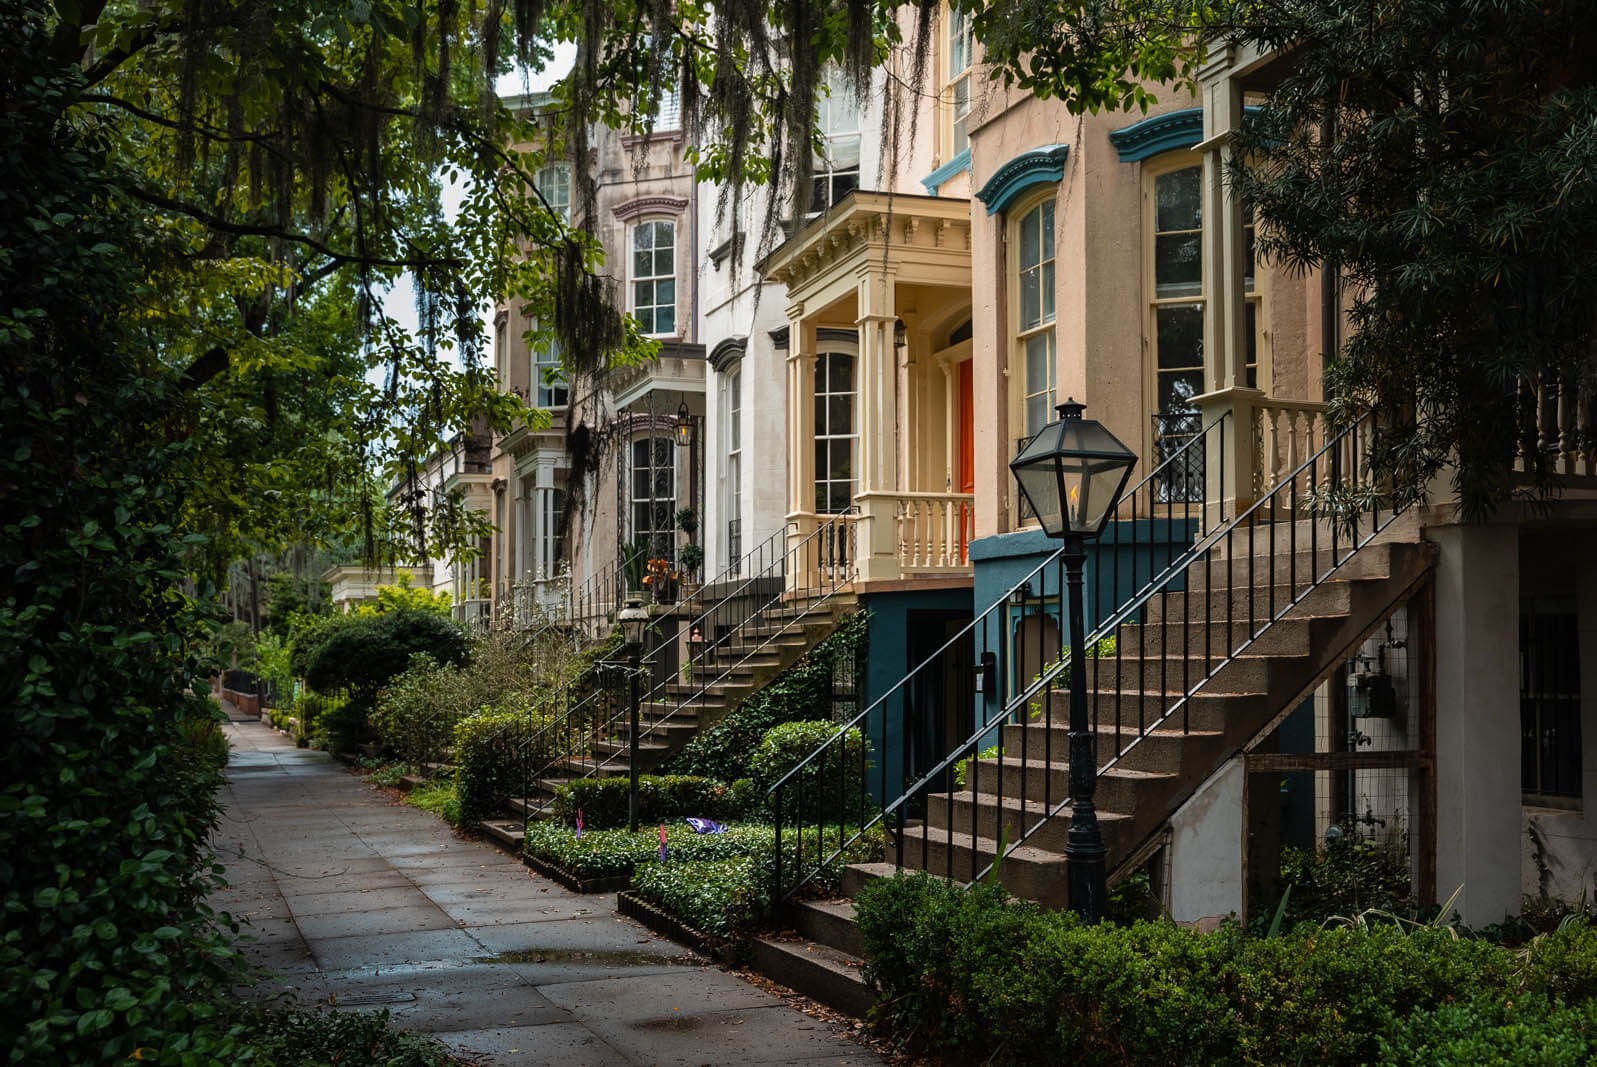 the pretty houses on Gaston Street in Savannah Georgia